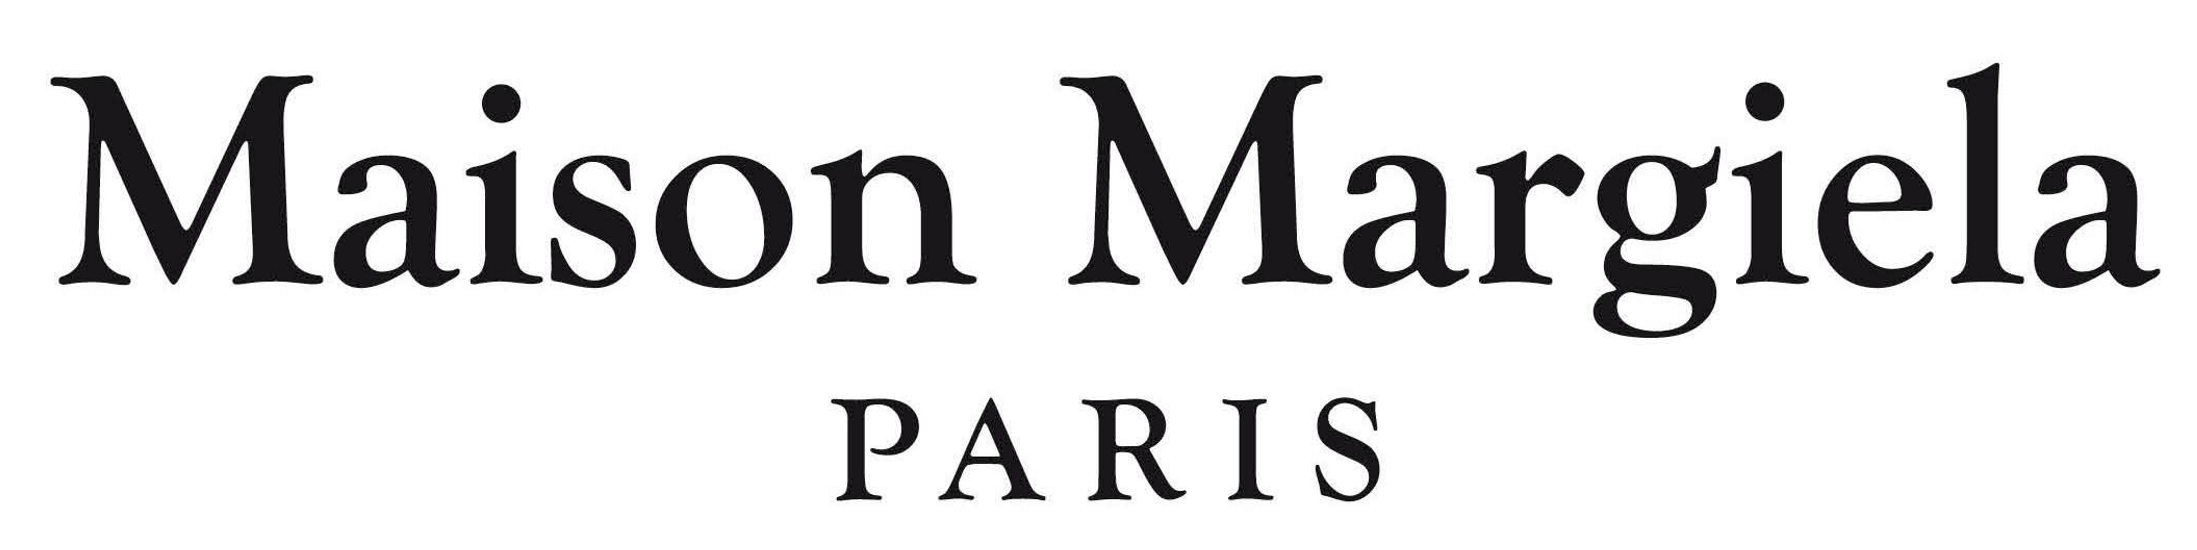 Maison Margiela – Logos Download